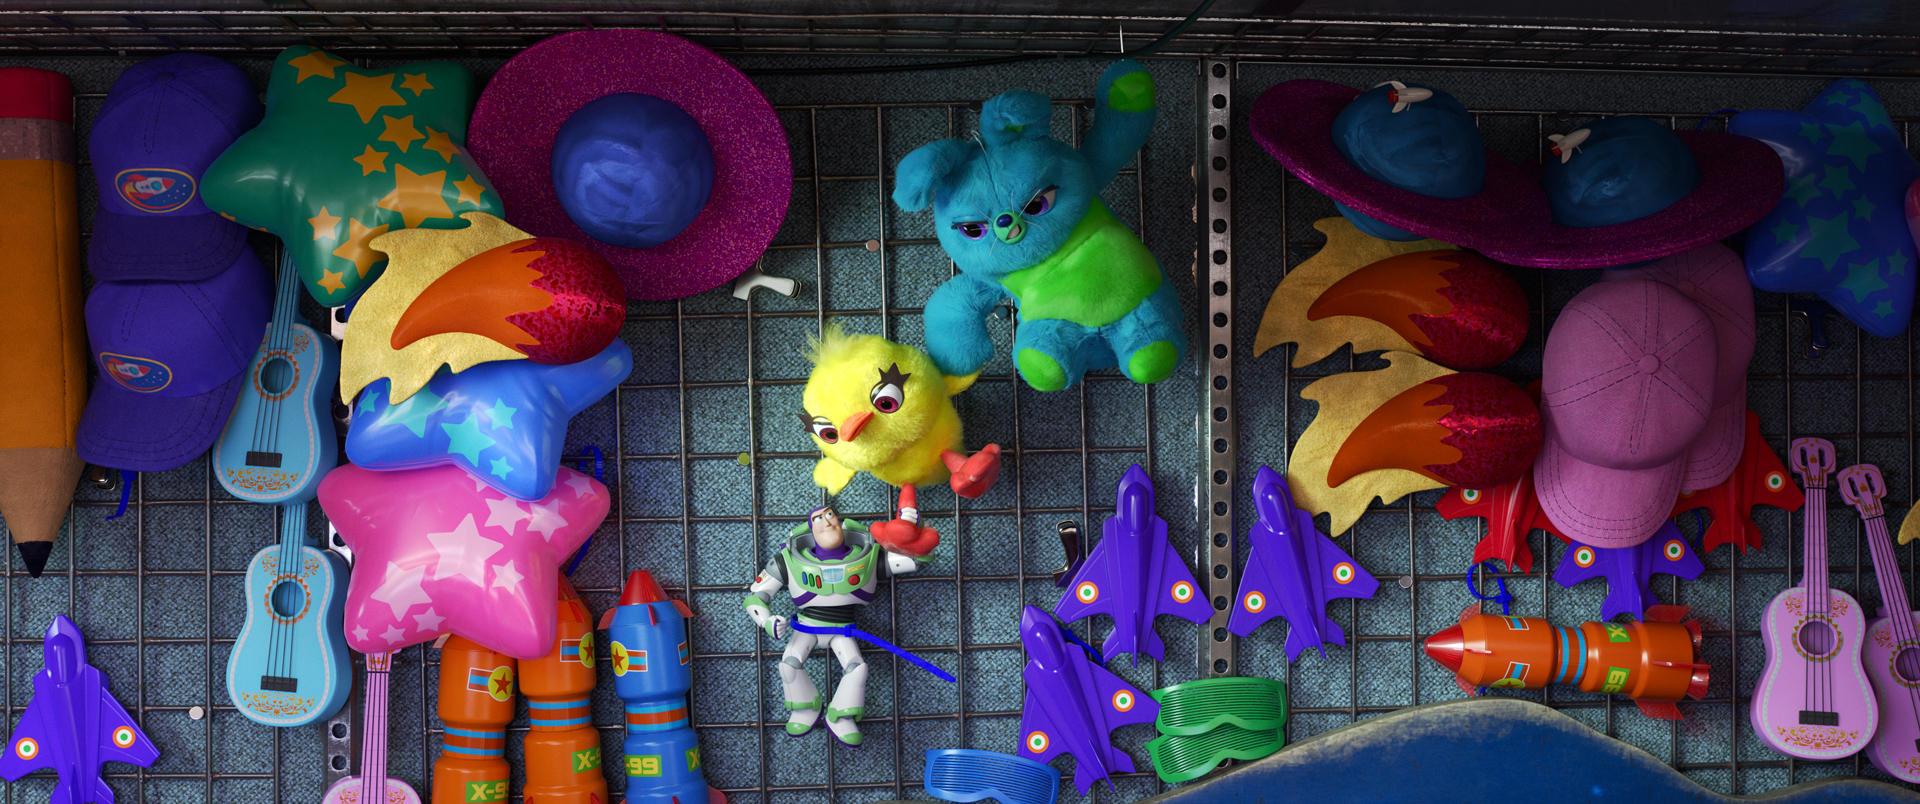 New 'Toy Story 4' Sneak Peek Airs During Big Game - The Walt Disney Company